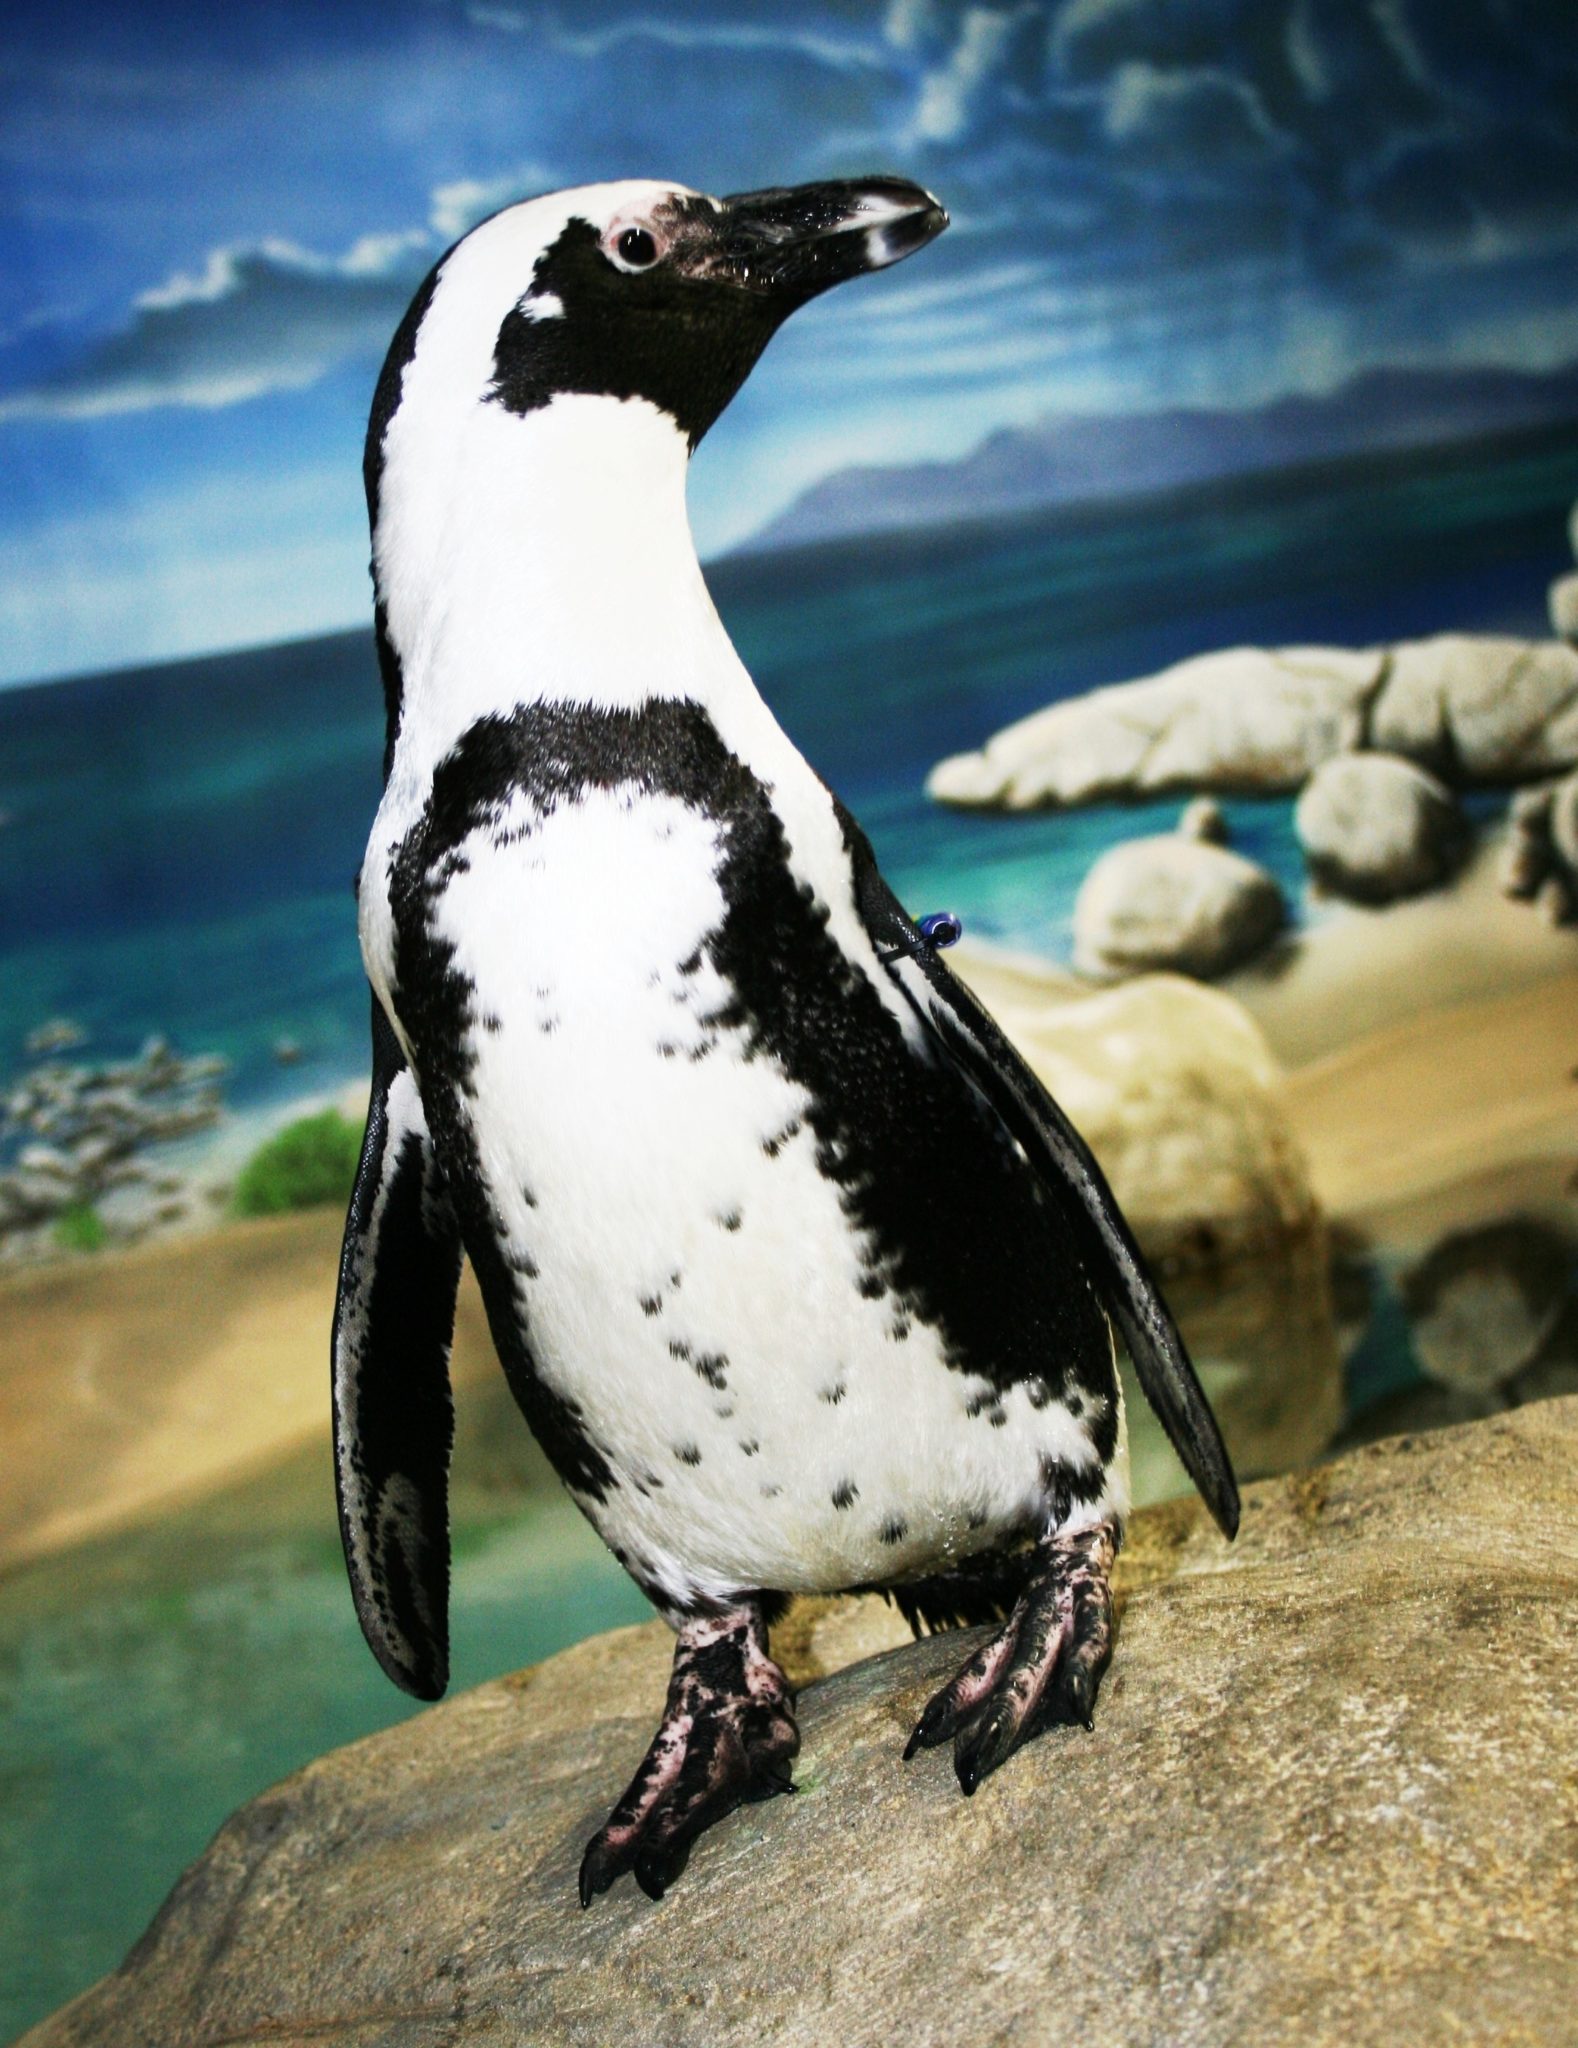 jenkinsons-aquarium-african-penguin-Kringle